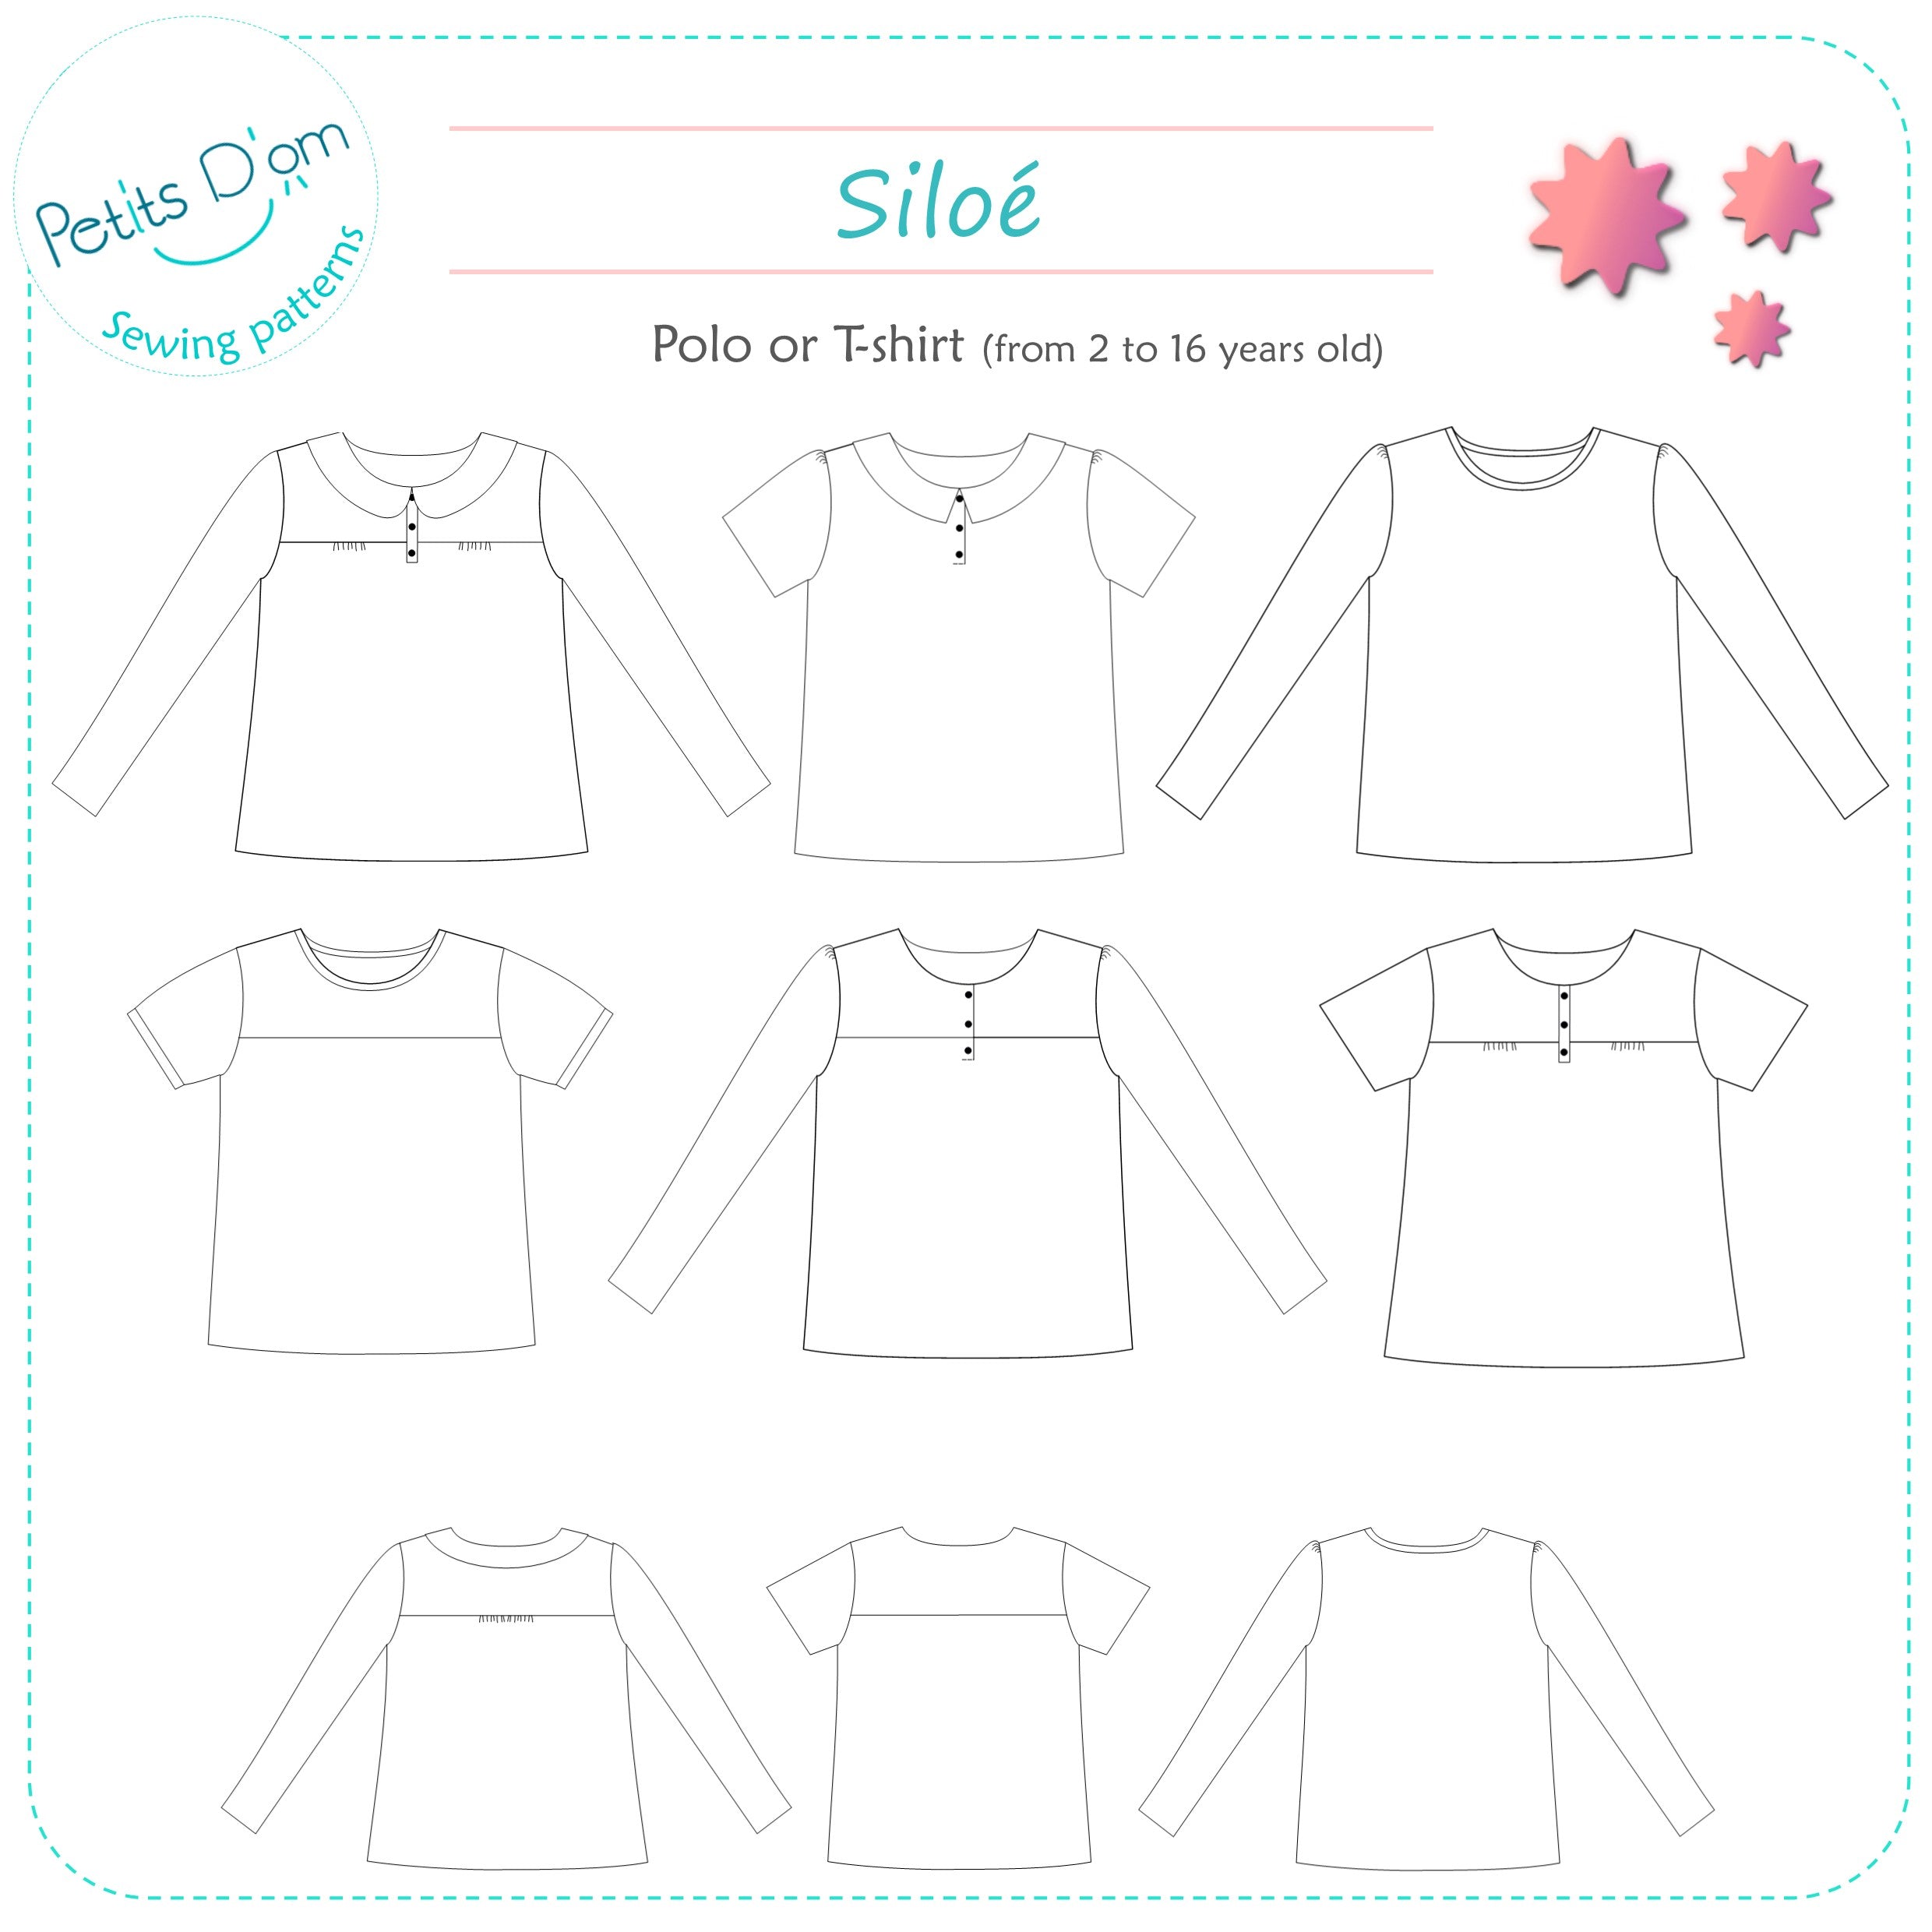 Petits D’om Child/Teen Siloé Polo or T-shirt